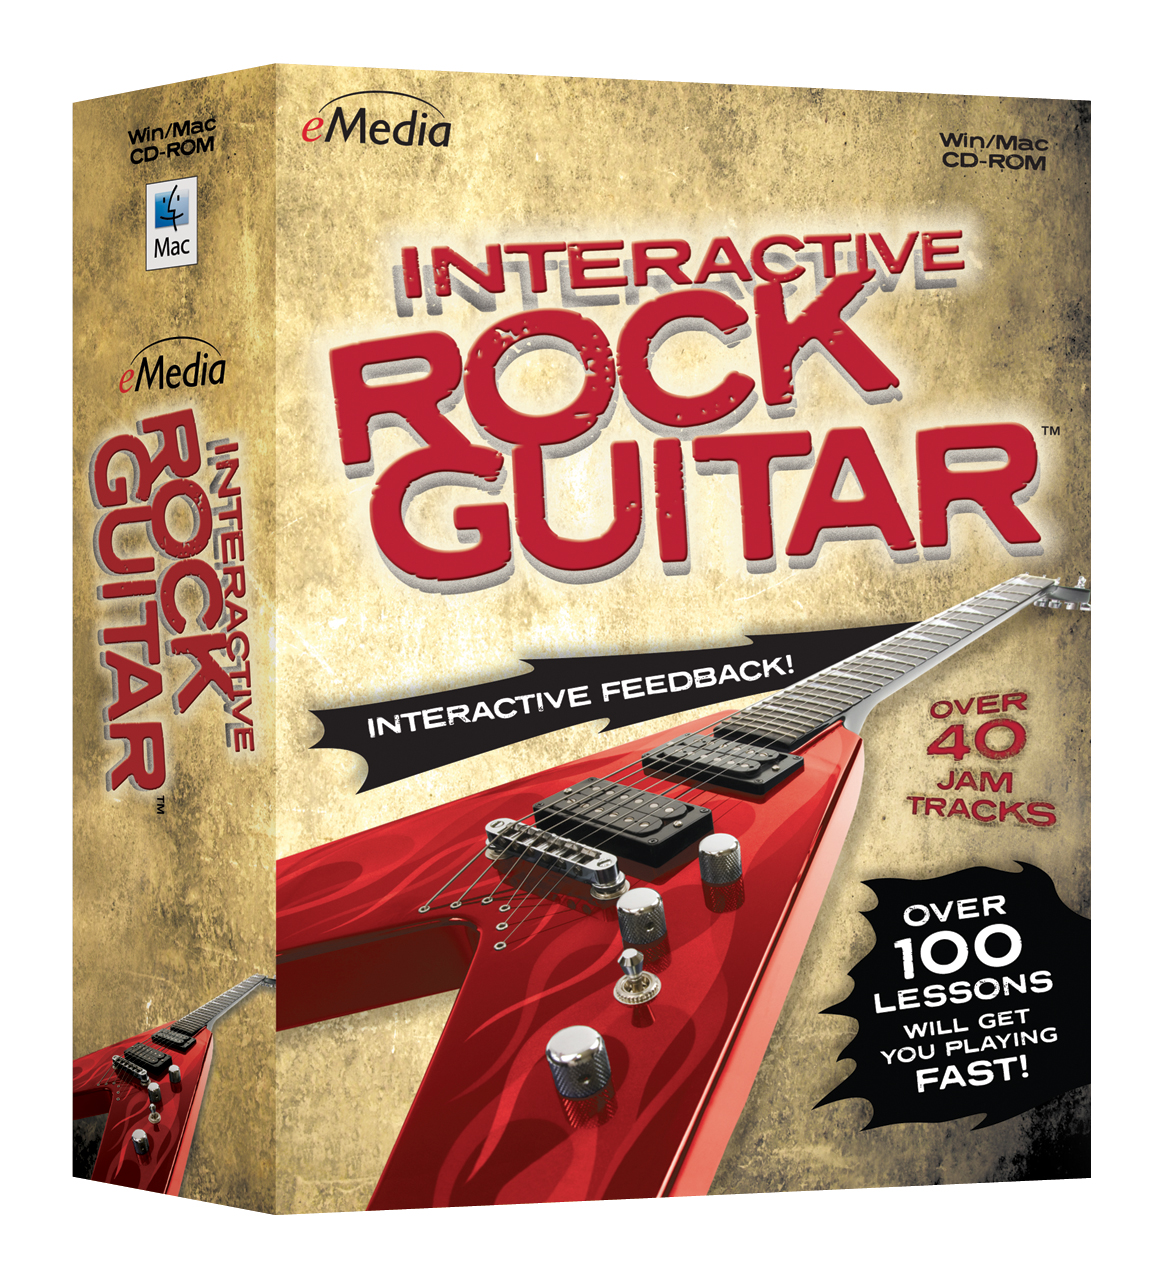 eMedia eMedia Interactive Rock Guitar Instructional Software